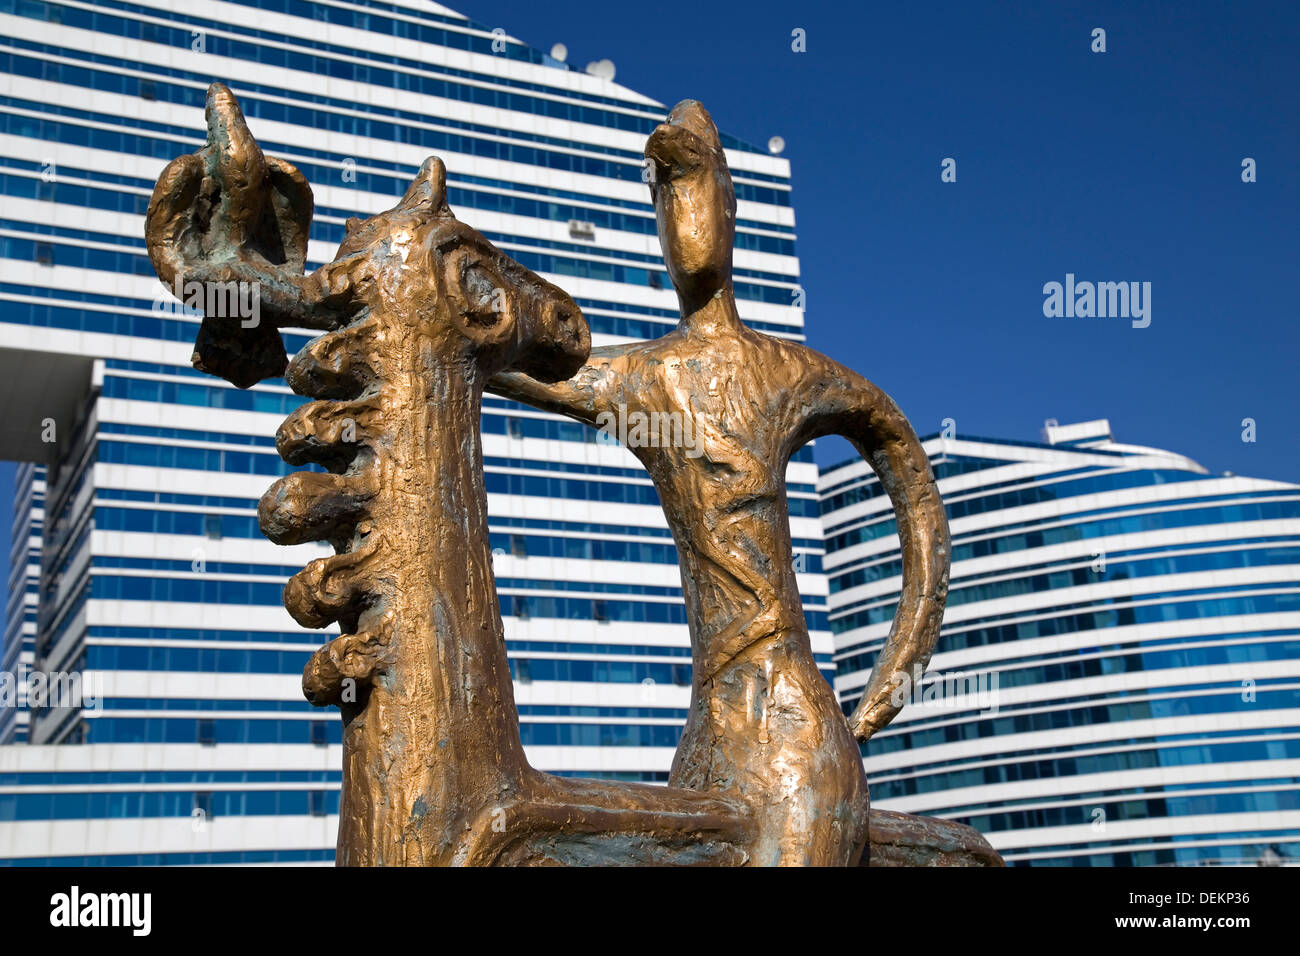 Skulptur und Astana modernen Gebäuden, Kasachstan Stockfoto